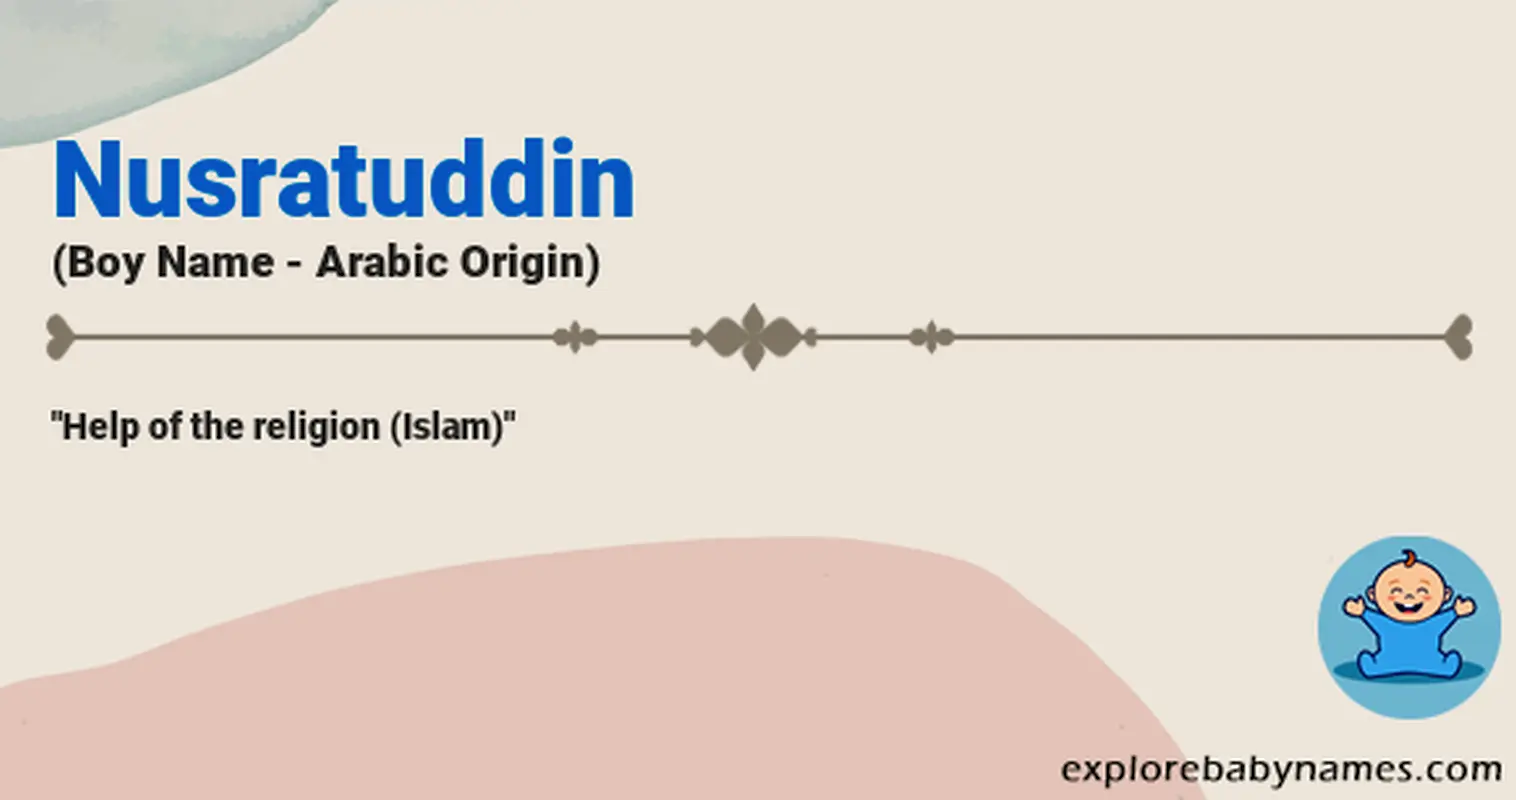 Meaning of Nusratuddin